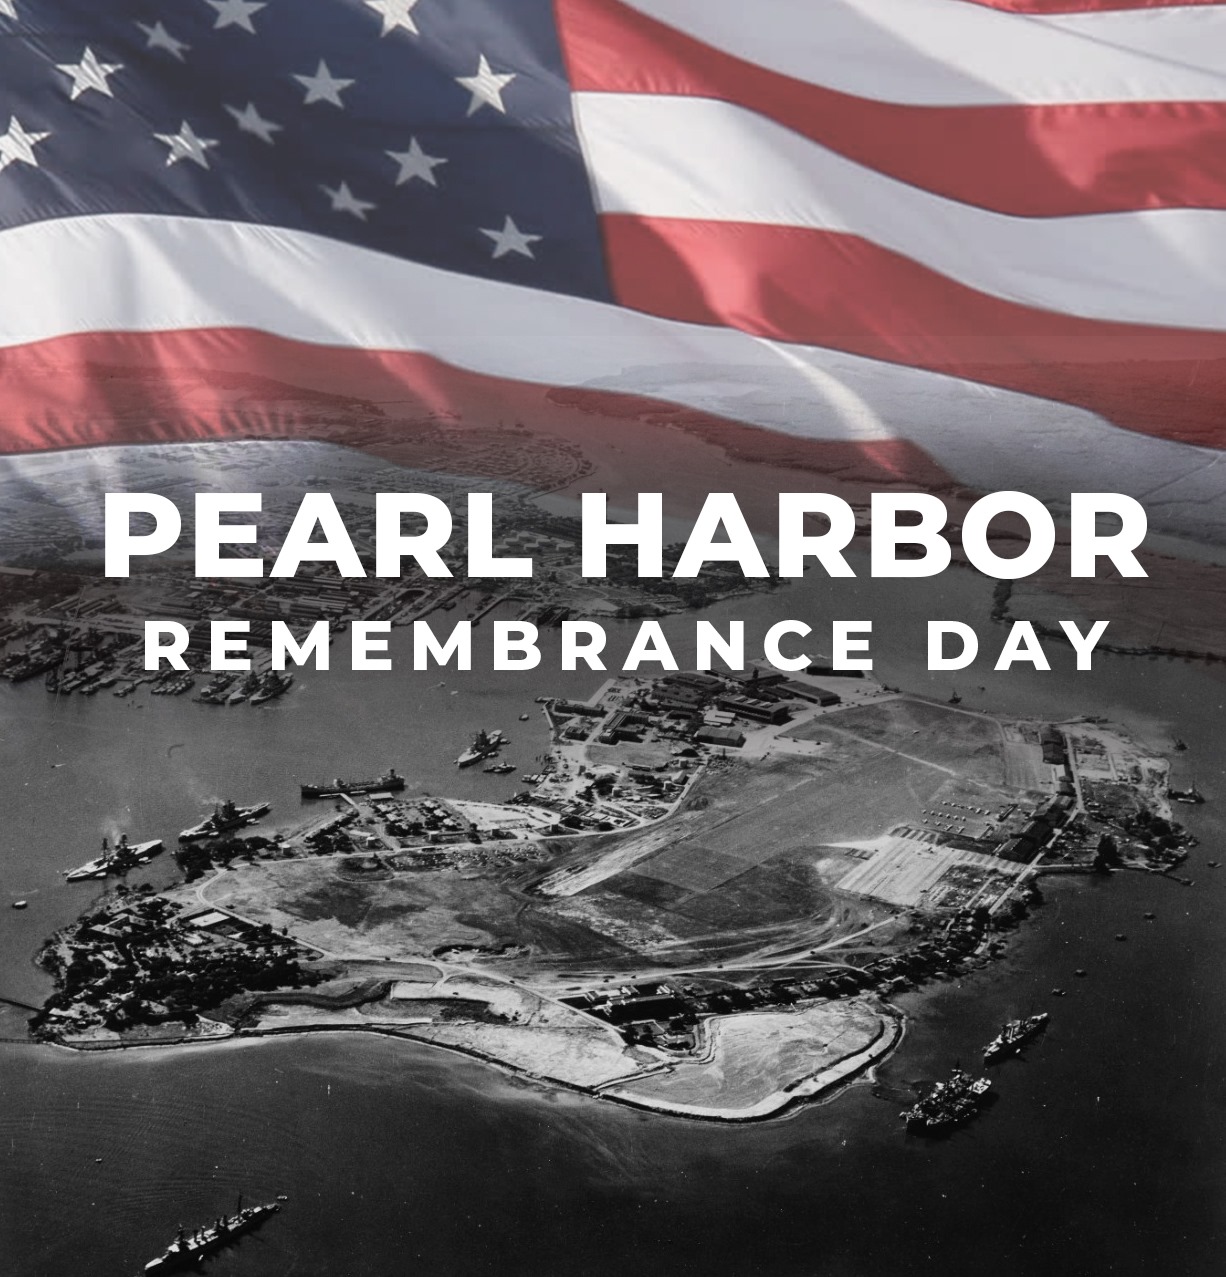 dec 7 pearl harbor remembrance day